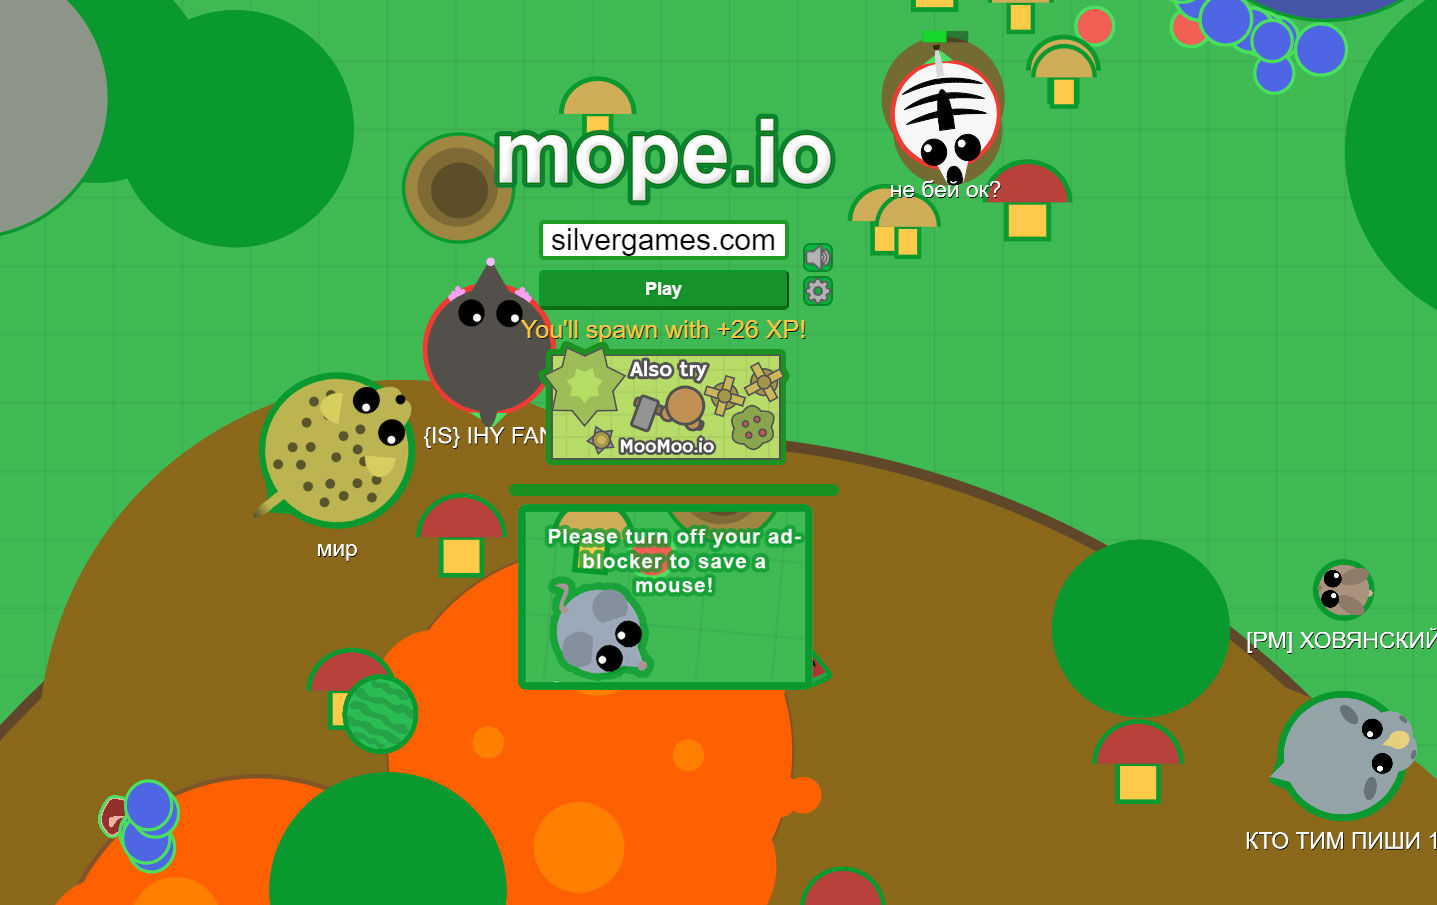 Mope.io - Jouez à Mope.io sur Poki